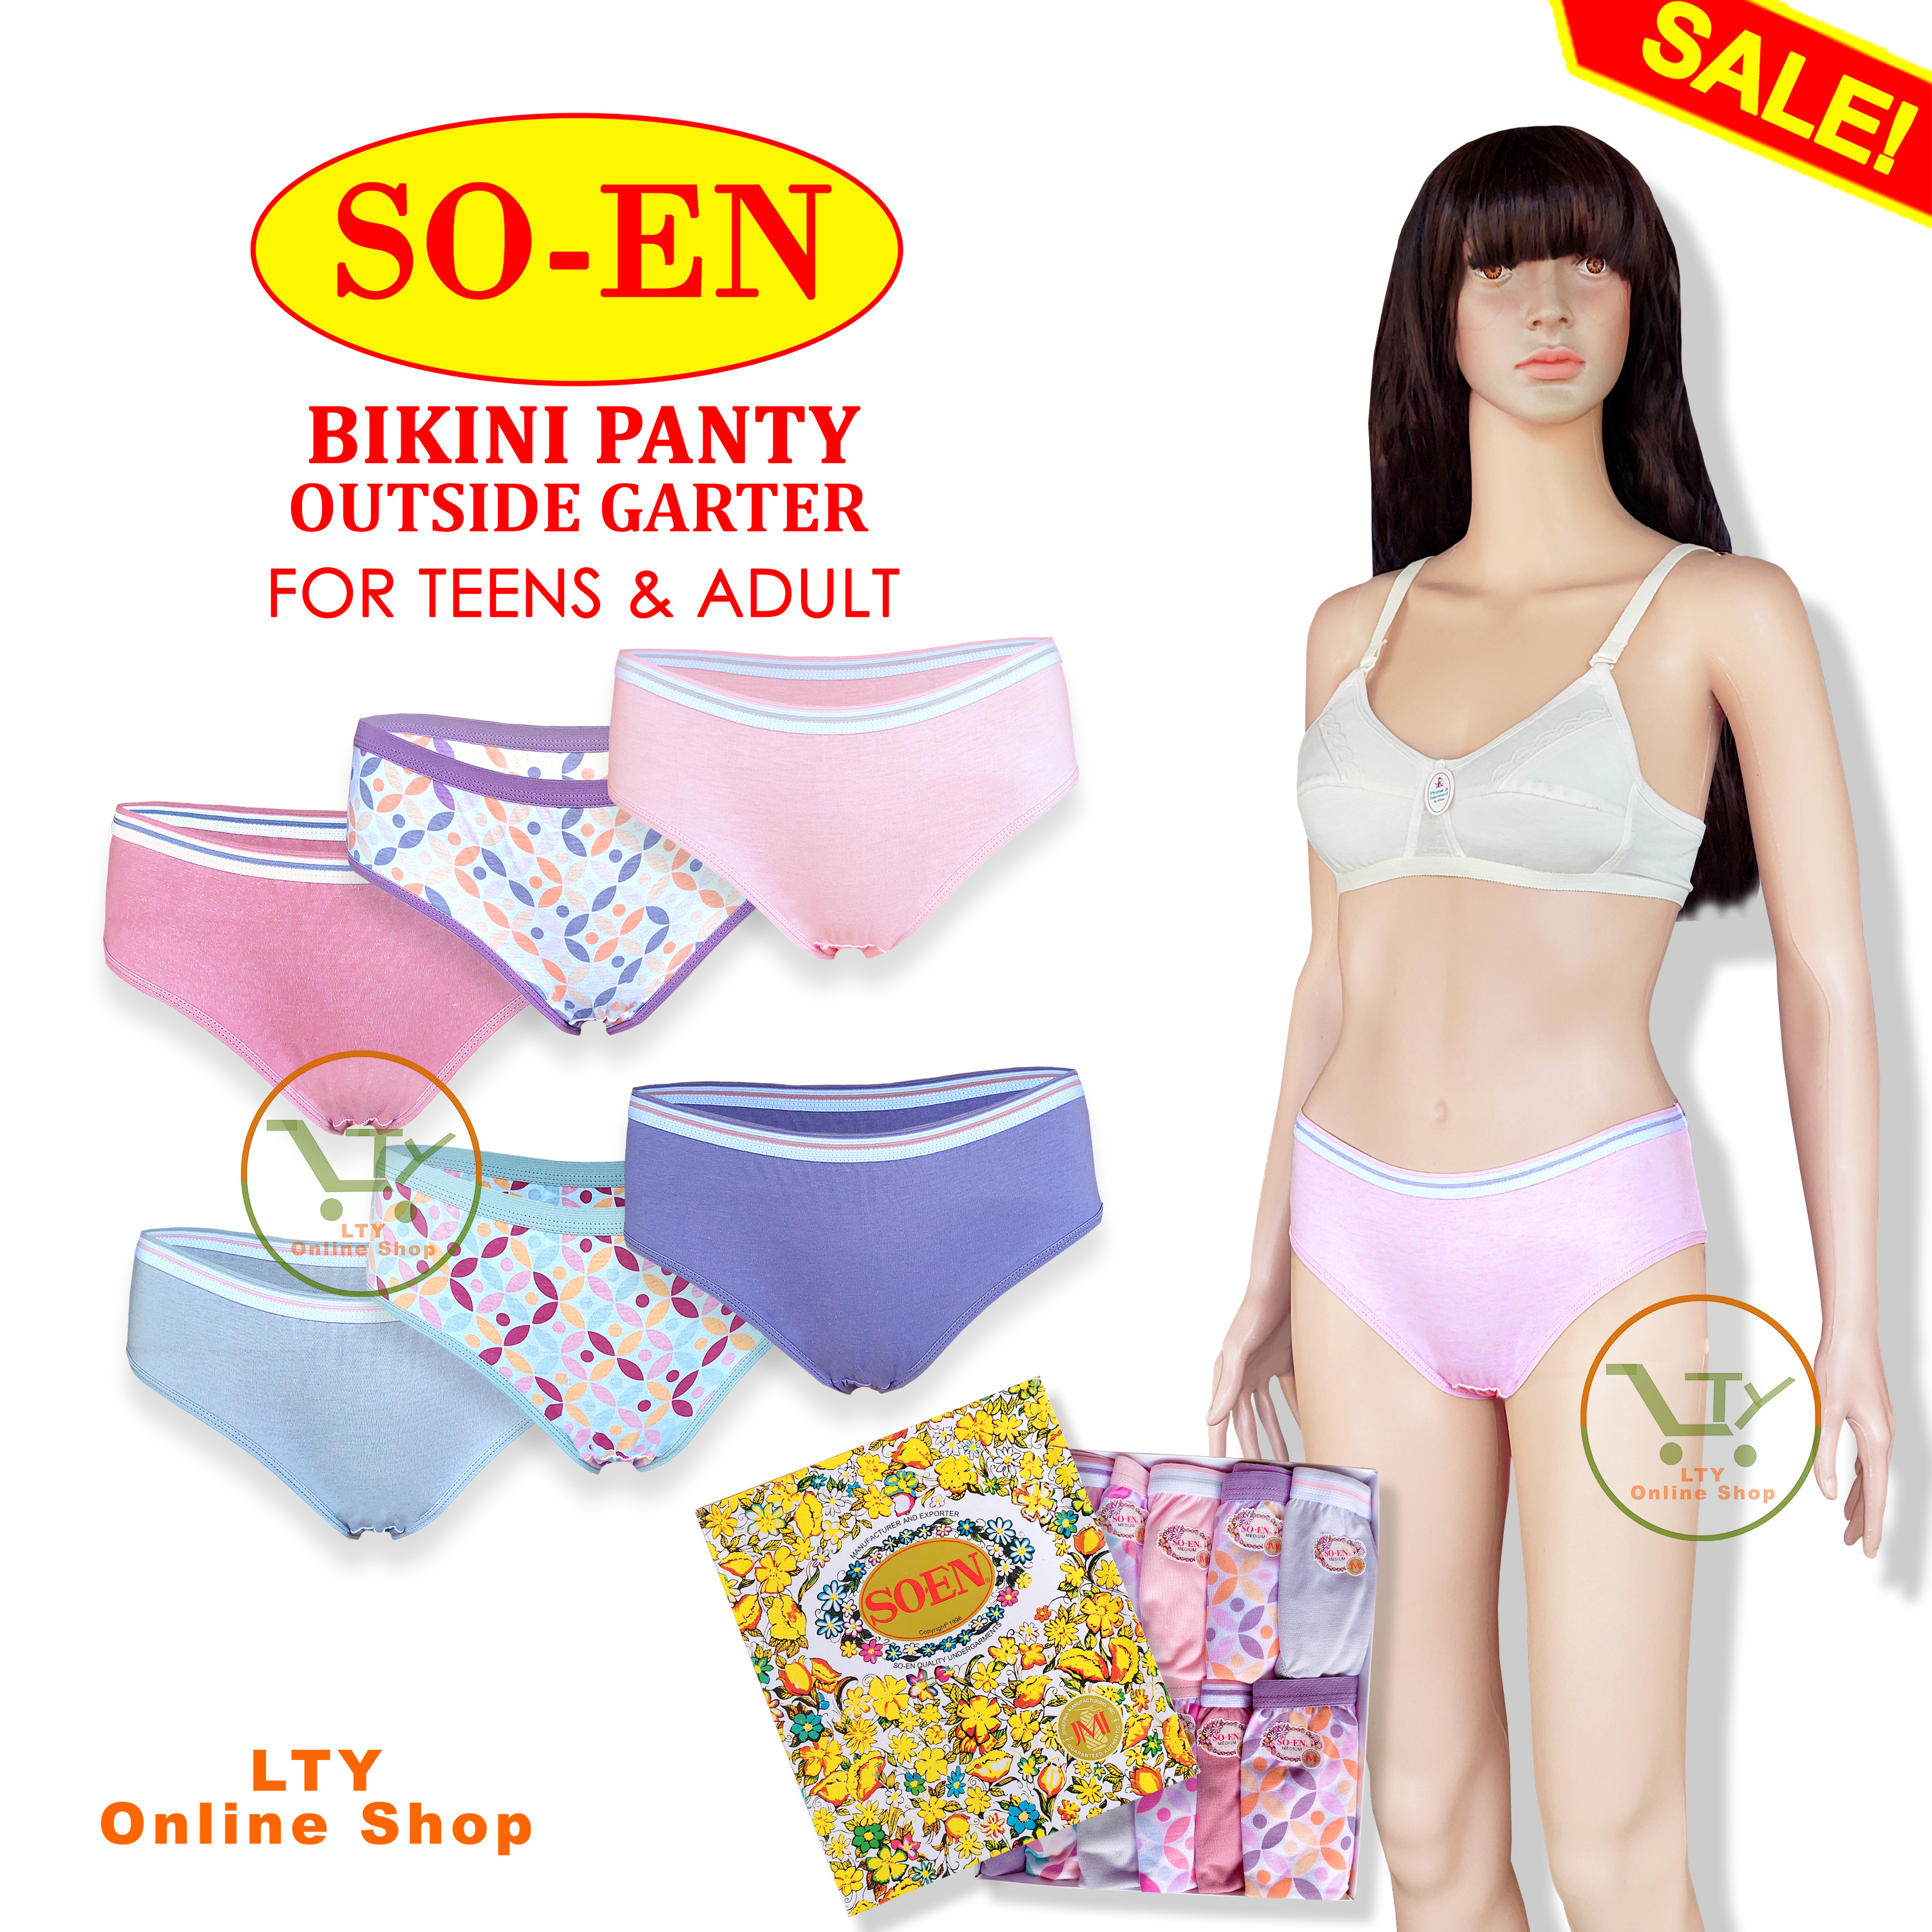 Buy Soen Panty 12 online